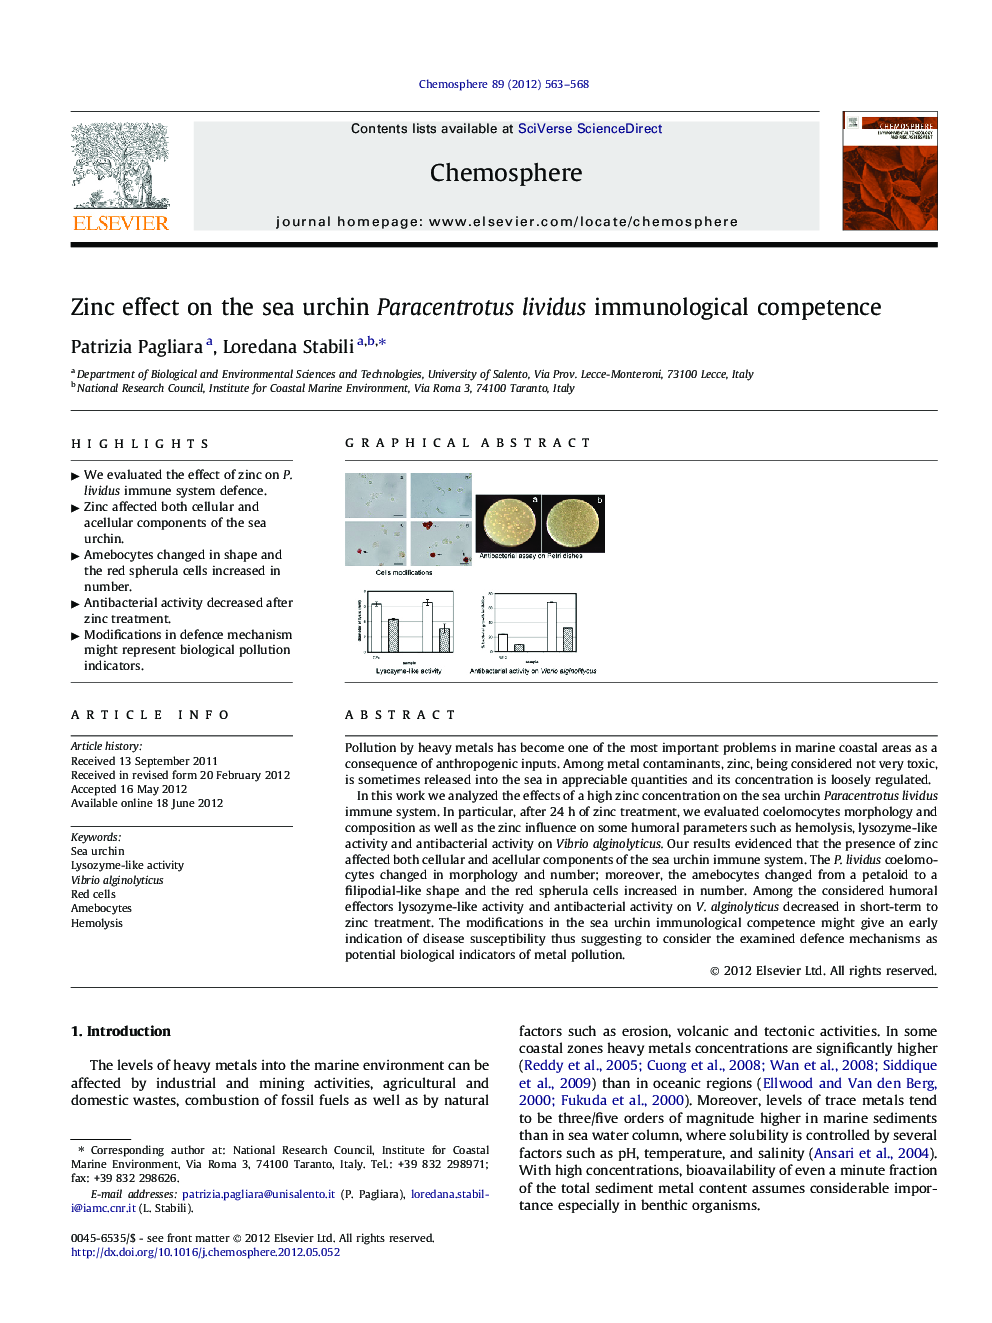 Zinc effect on the sea urchin Paracentrotus lividus immunological competence